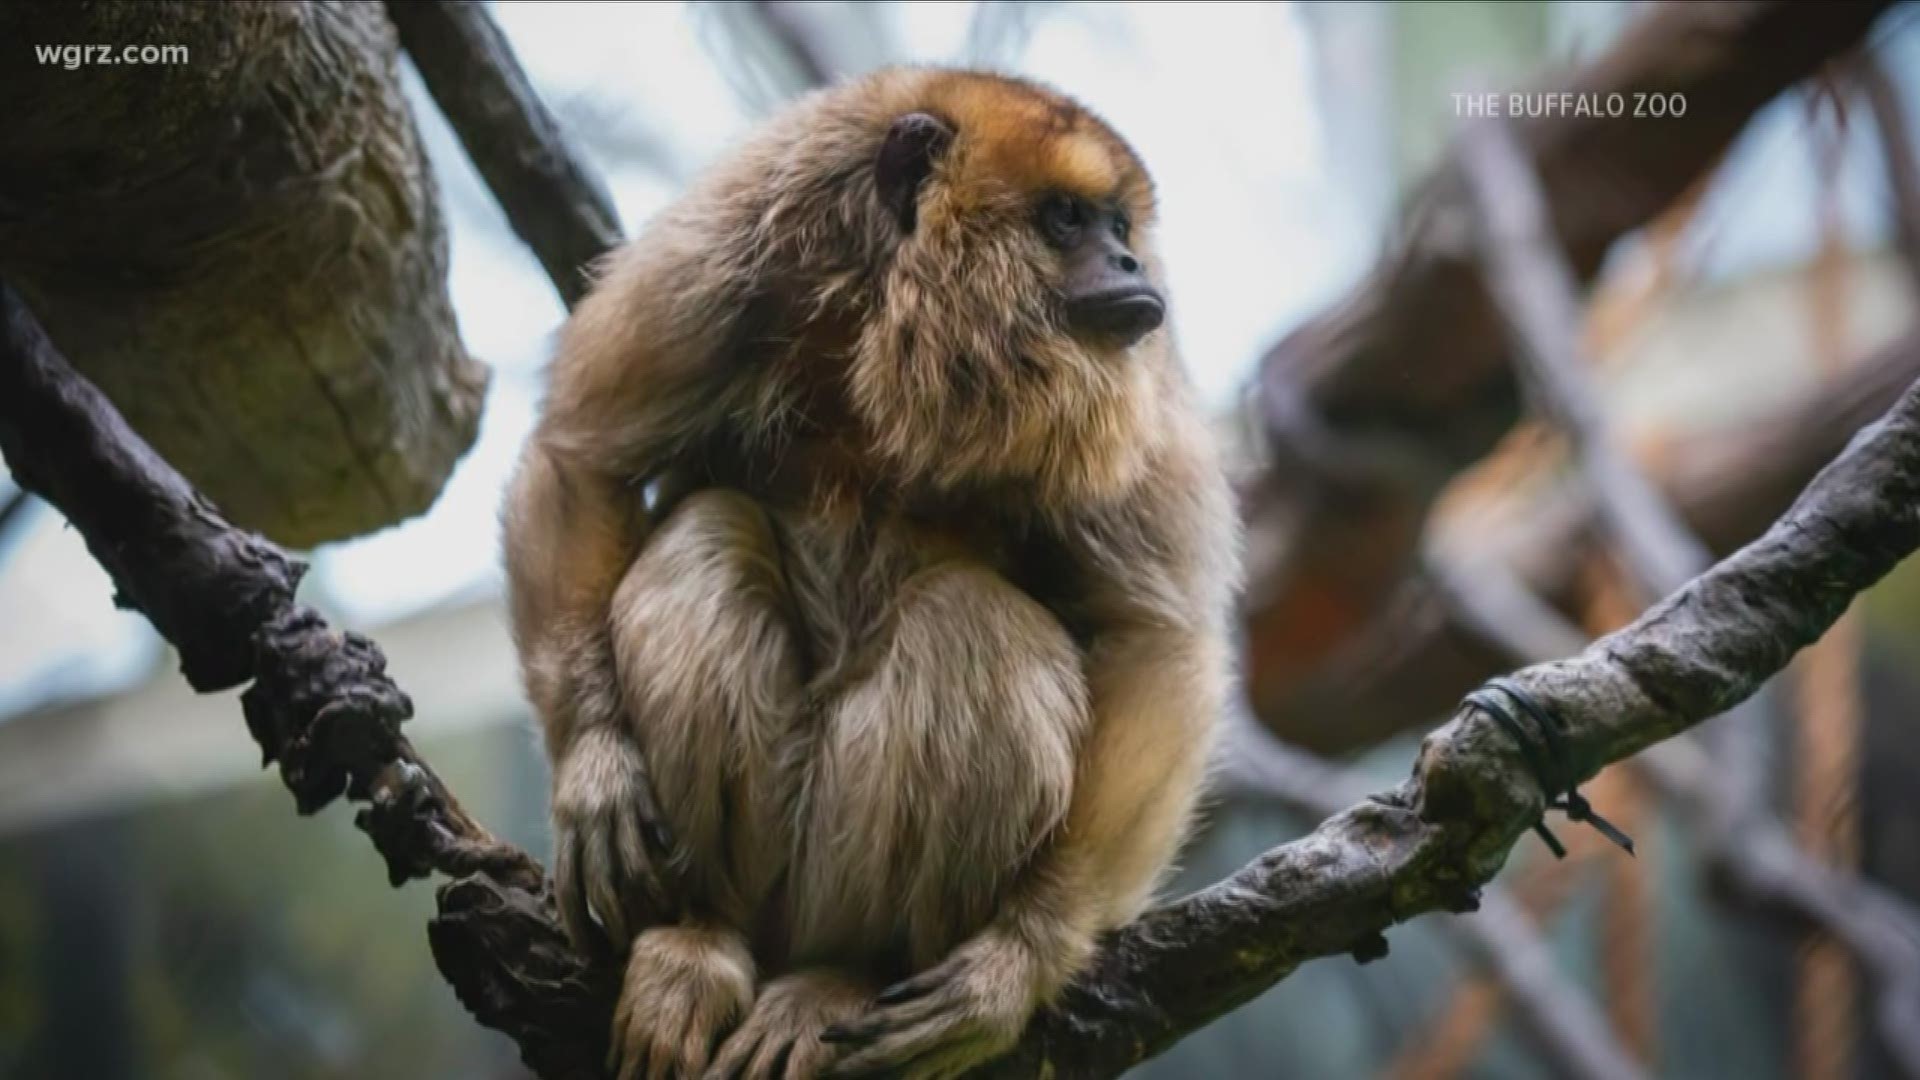 Jasper, a female howler monkey, now living at the Buffalo Zoo